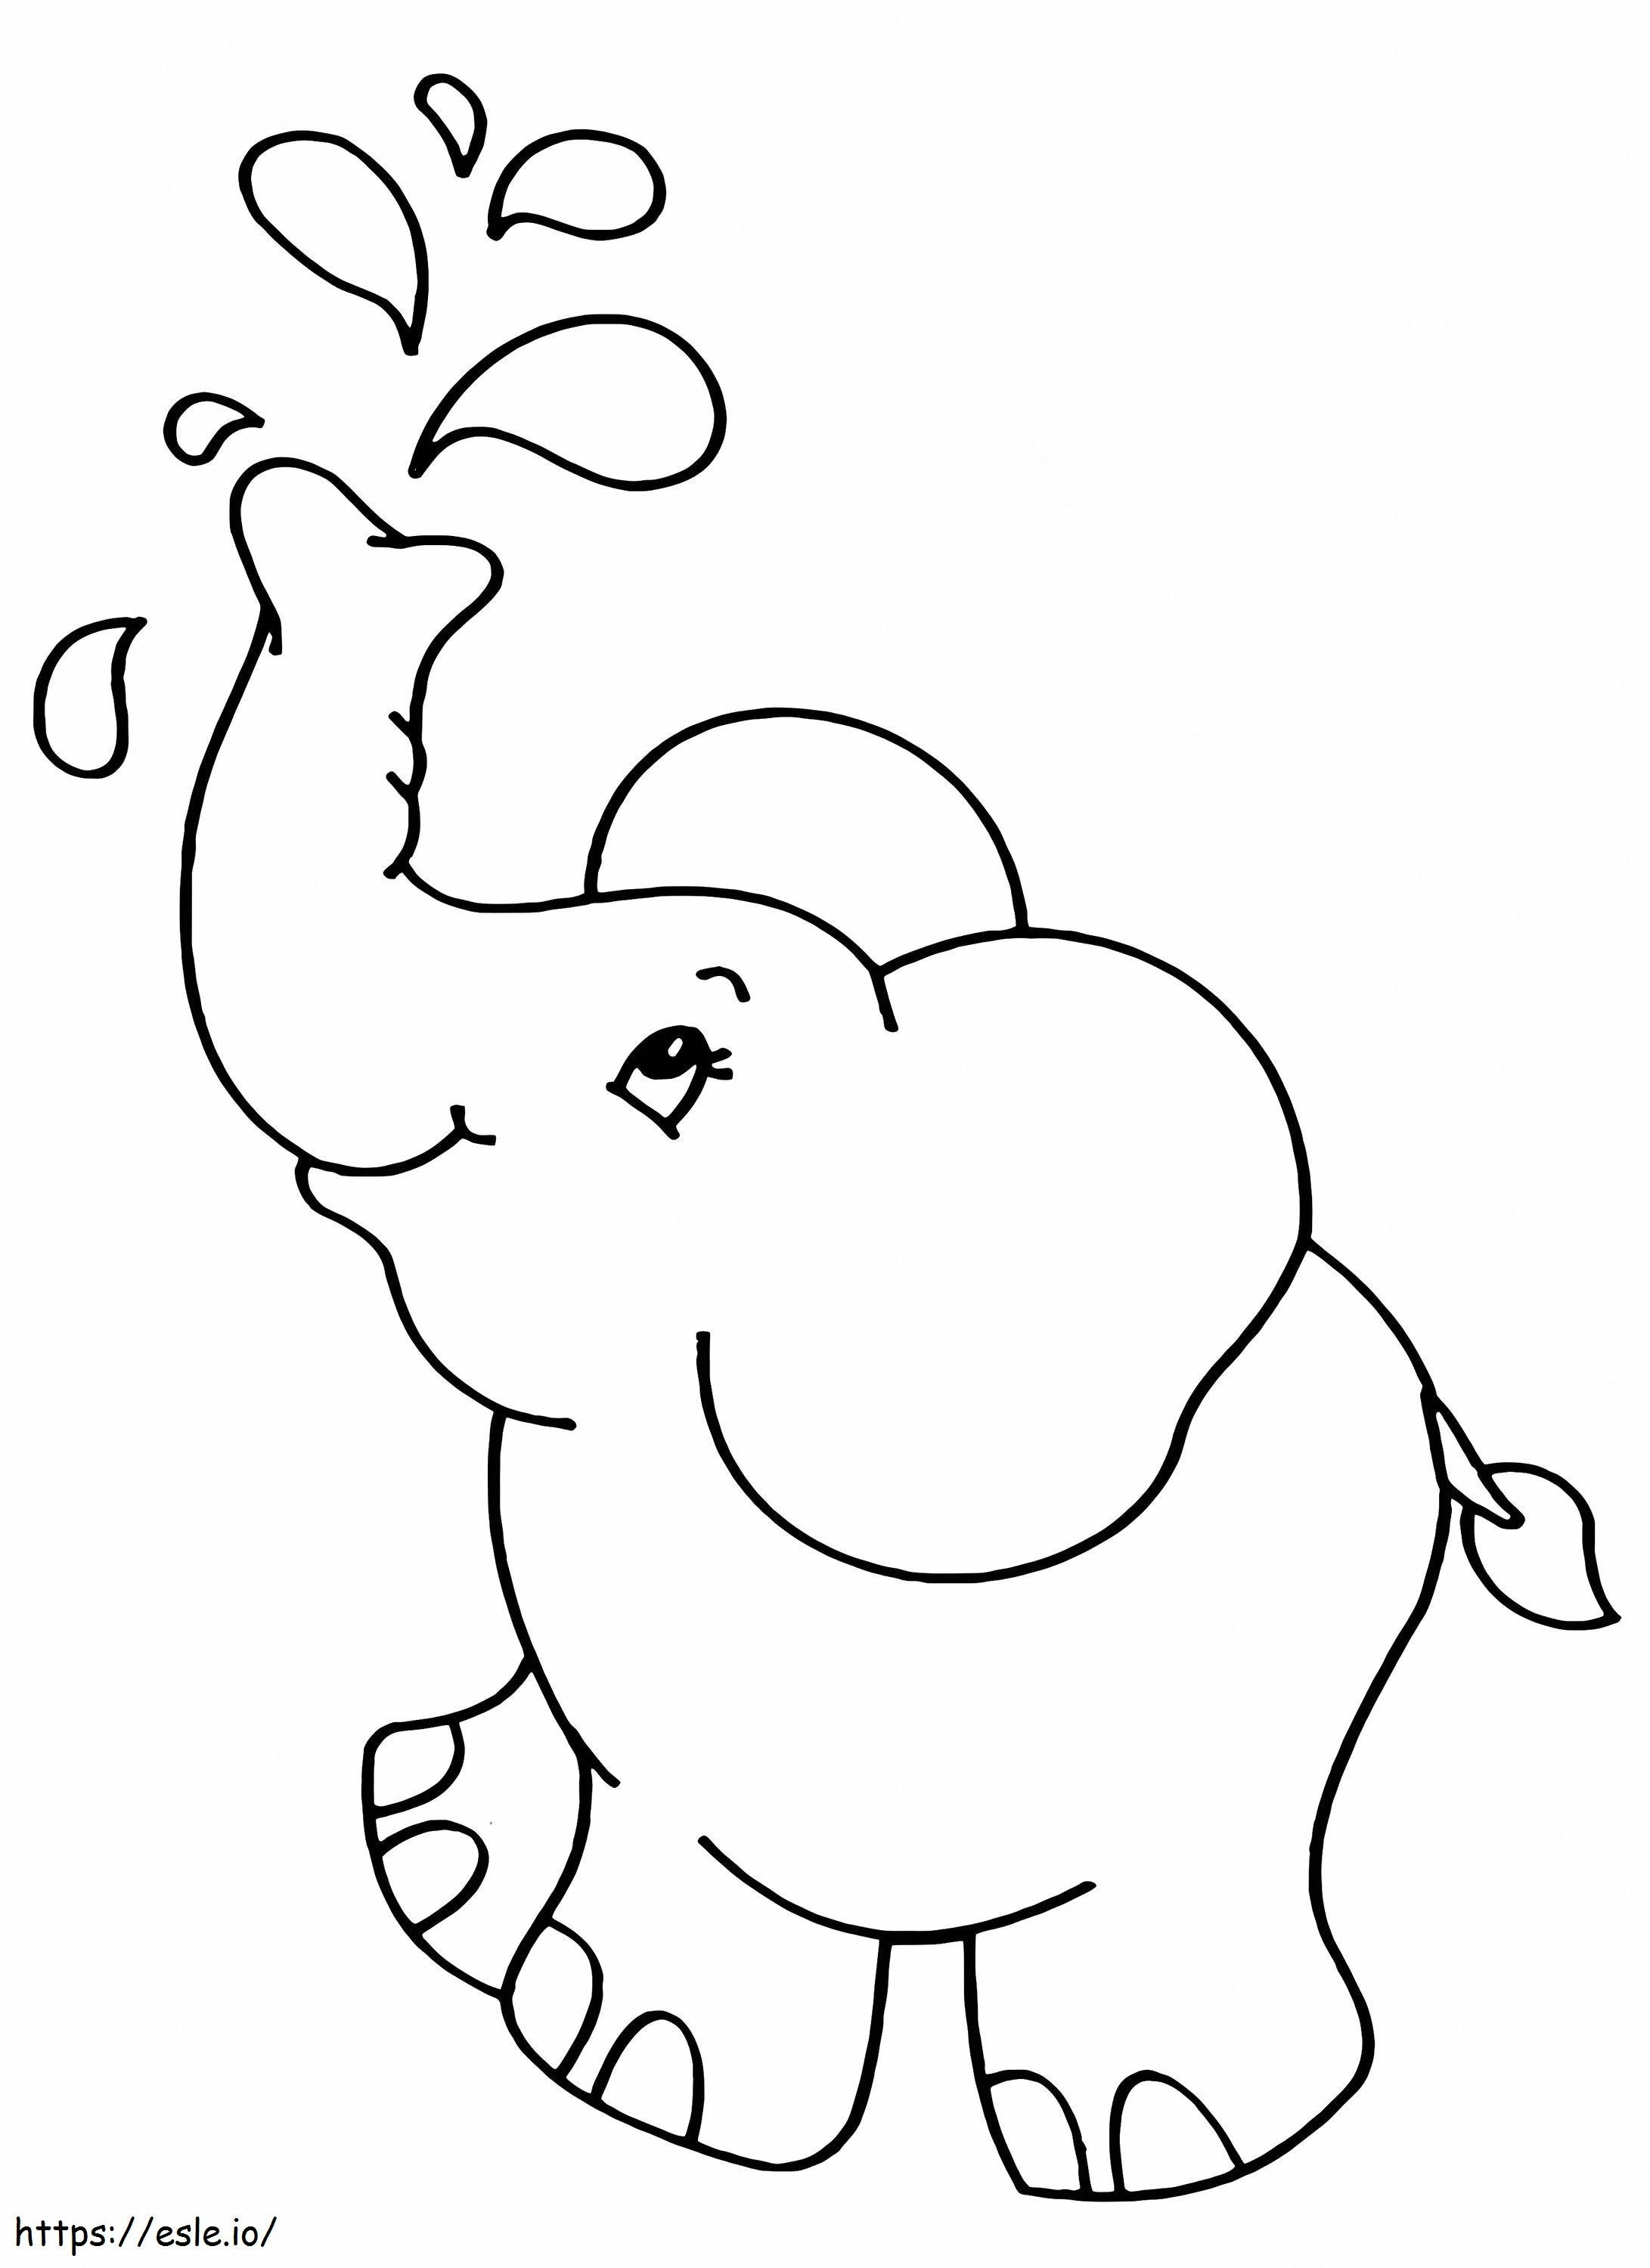 Elefante Kawaii da colorare